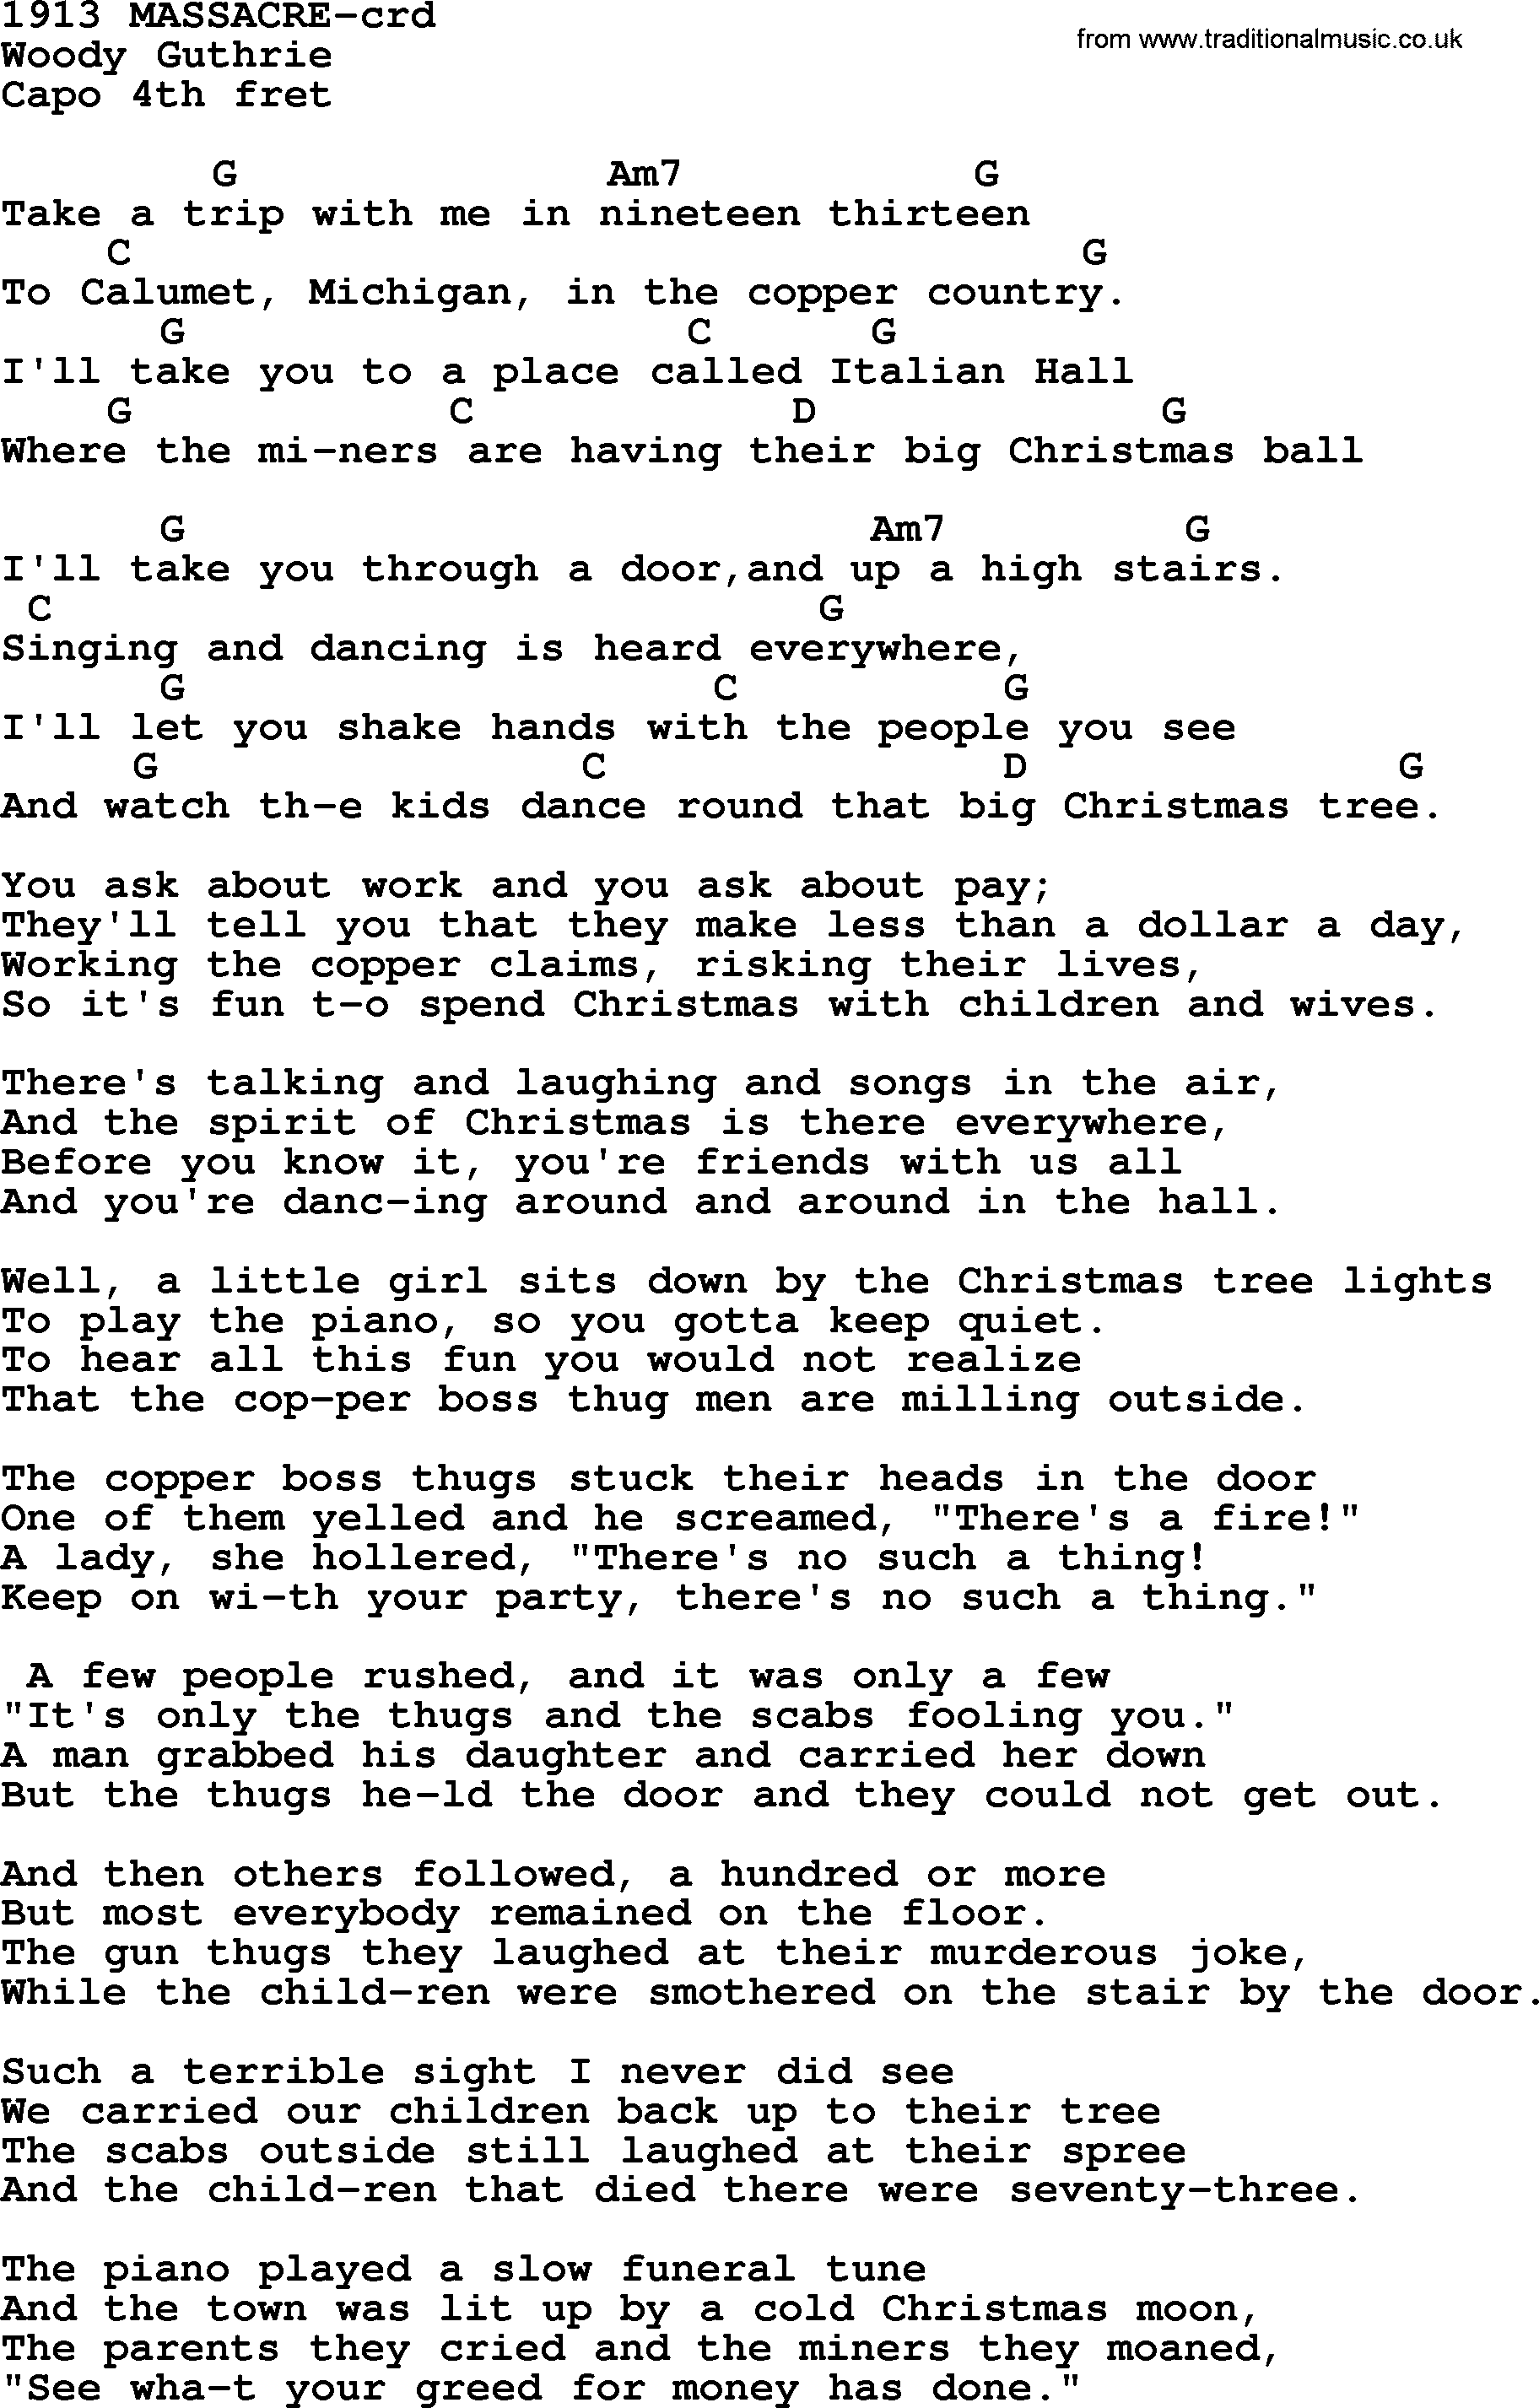 Woody Guthrie song 1913 Massacre lyrics and chords